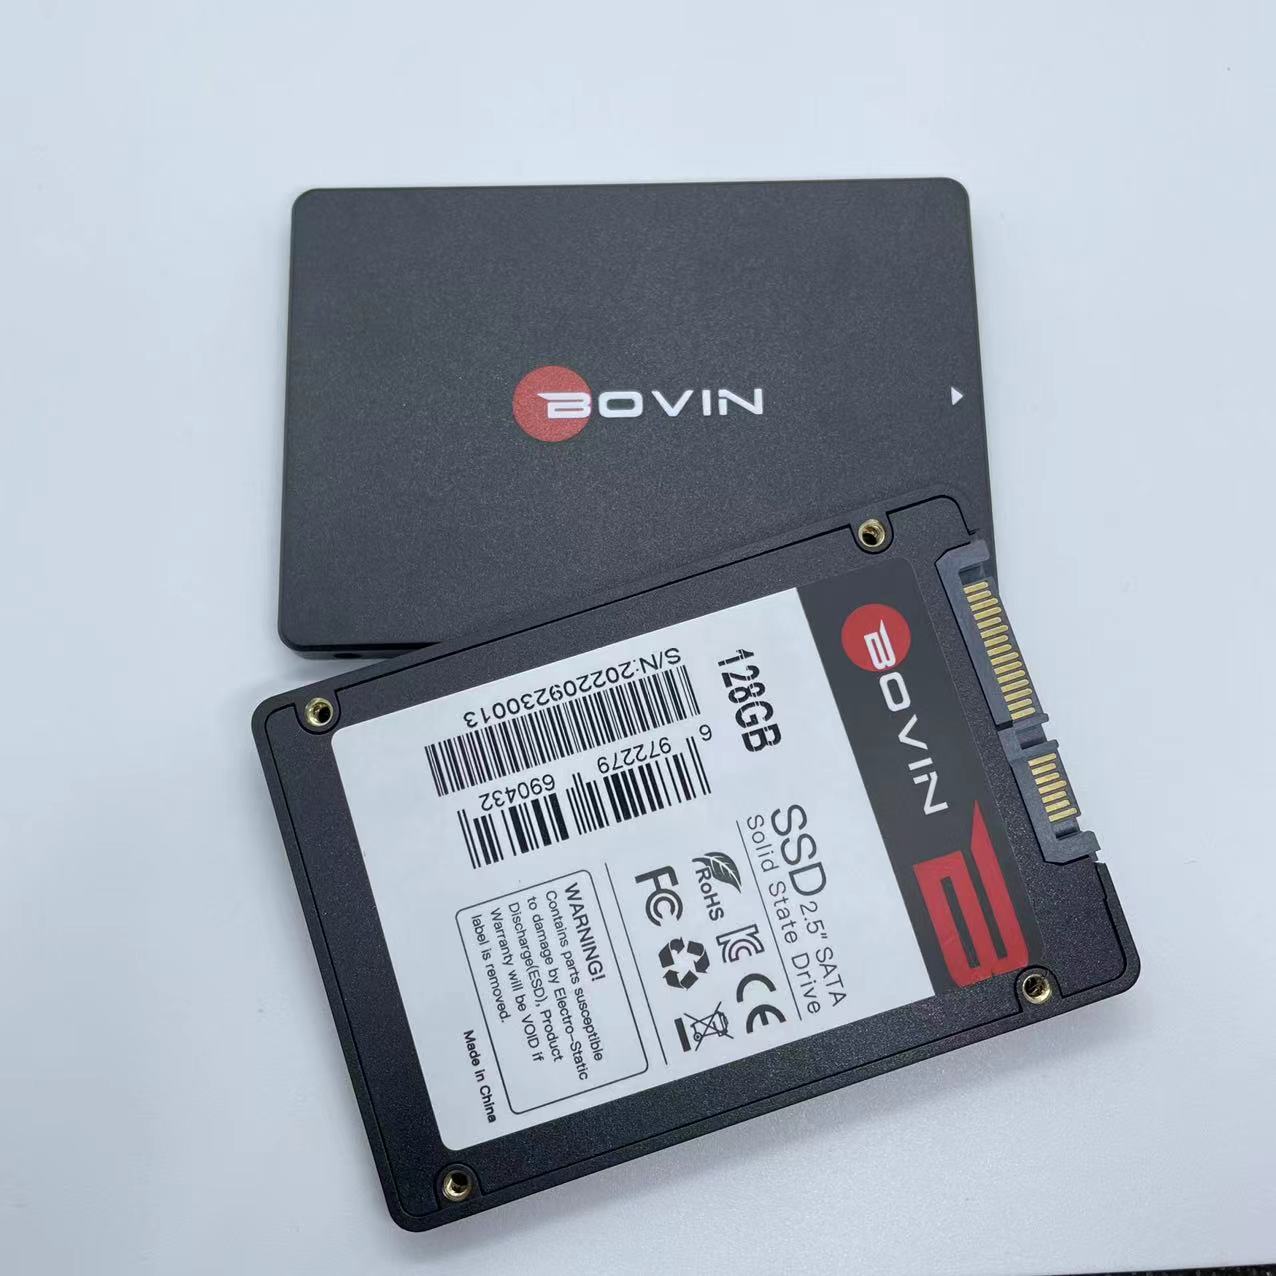 Bovine brand SSD 128GB 2.5″ SATA Laptop  Solid State Drive